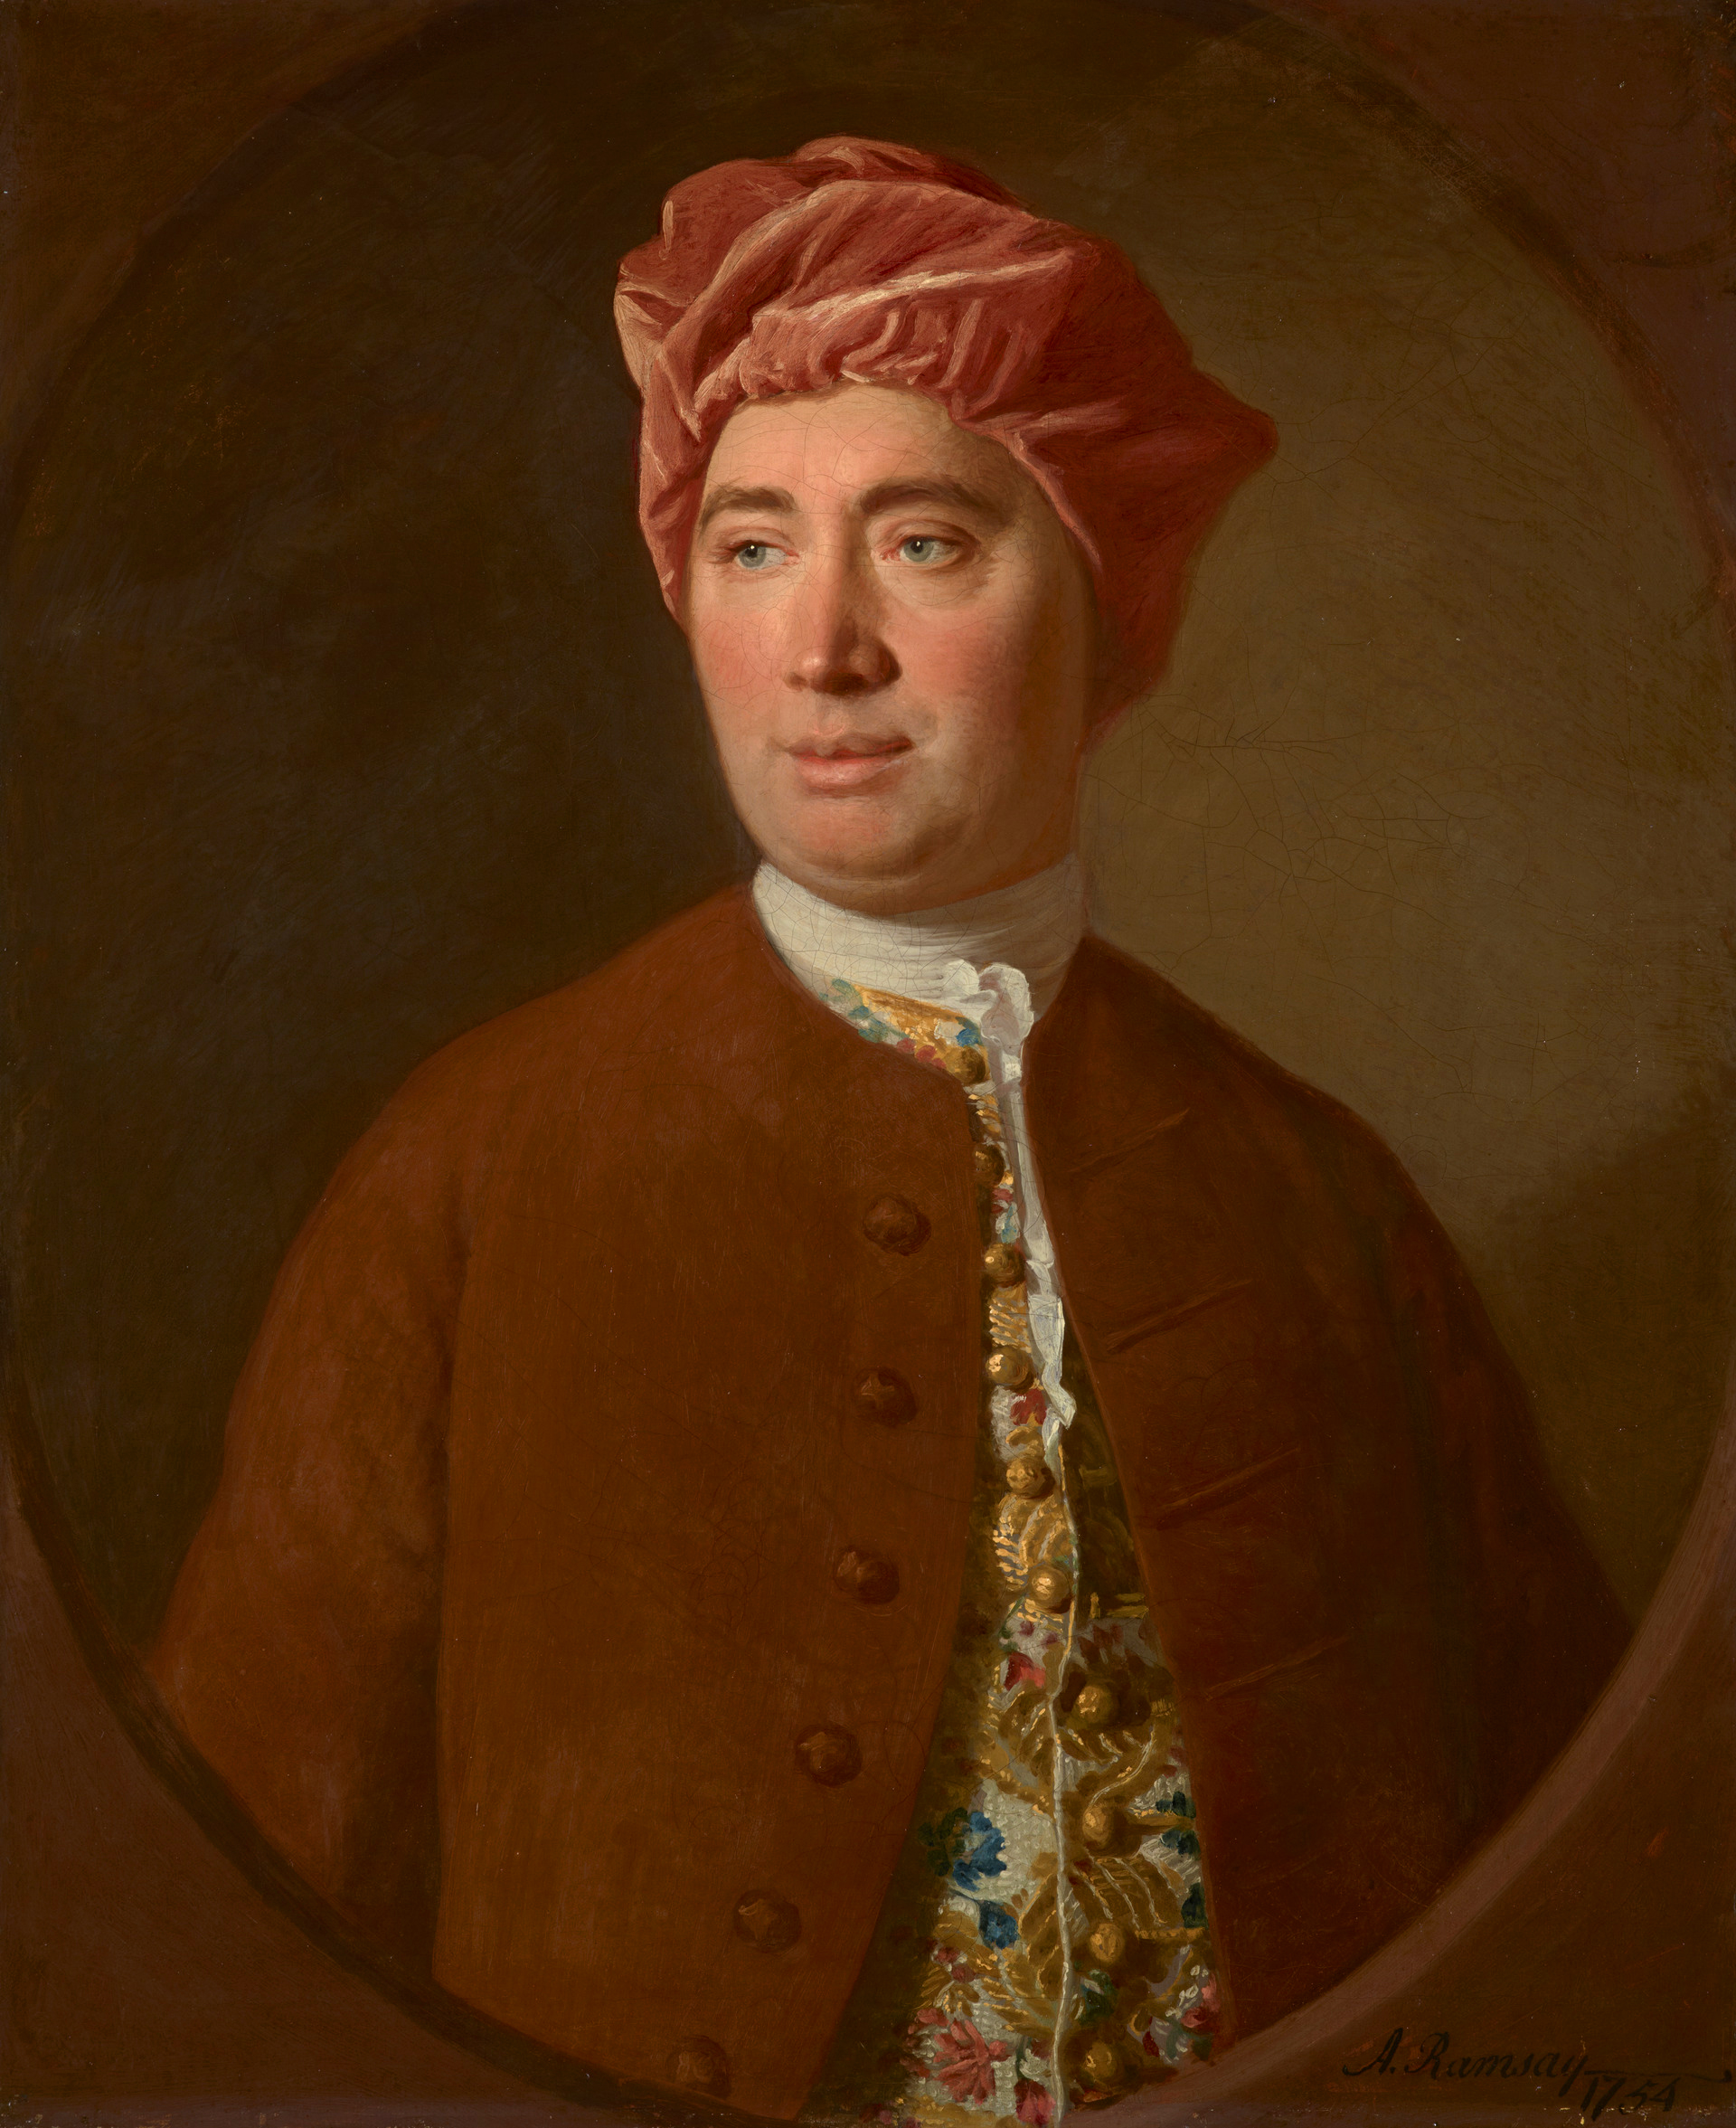 Image of David Hume